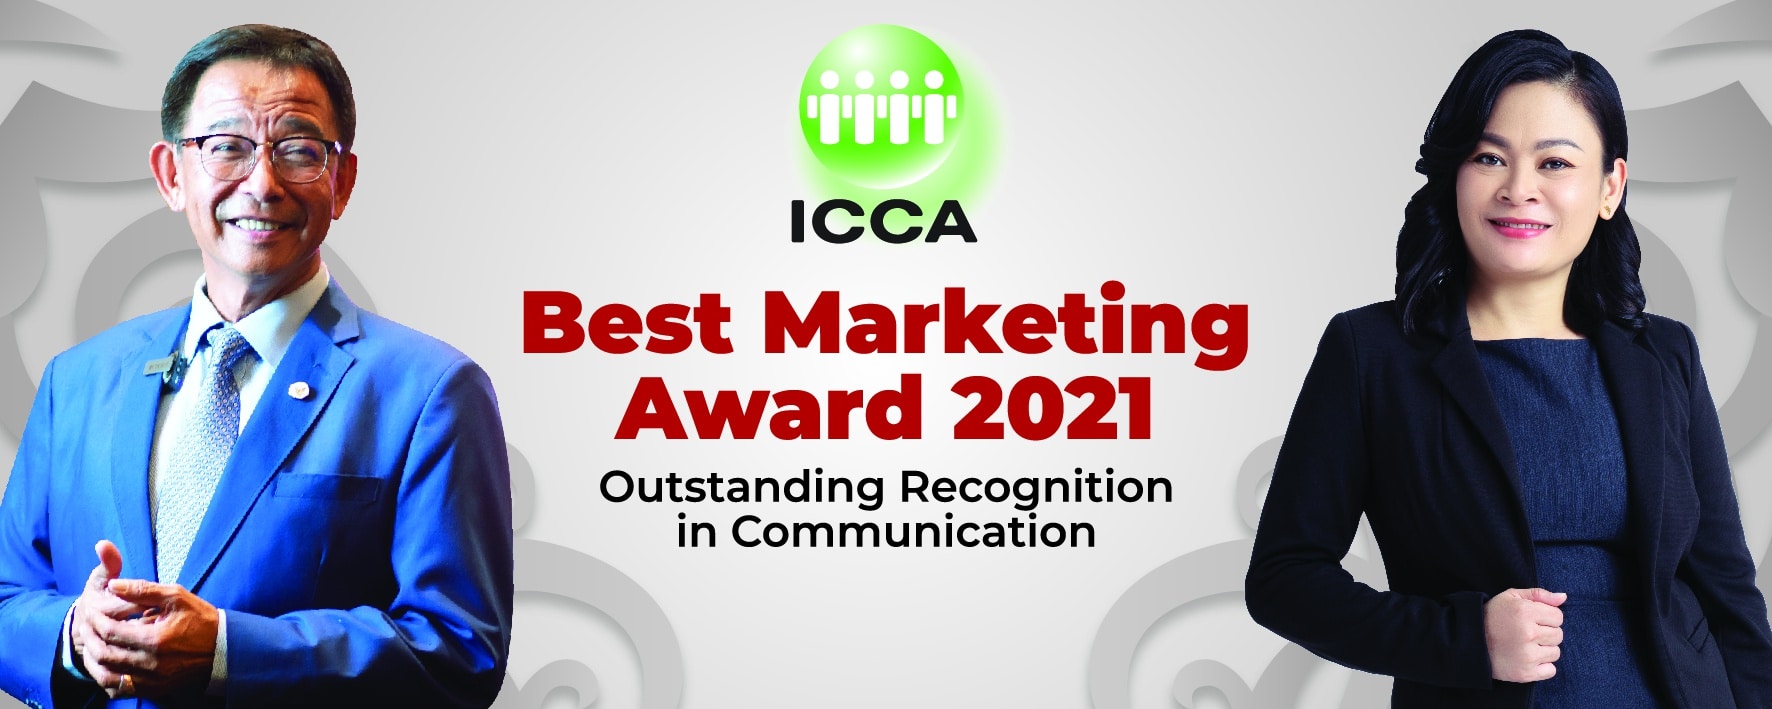 icca_best_marketing_award